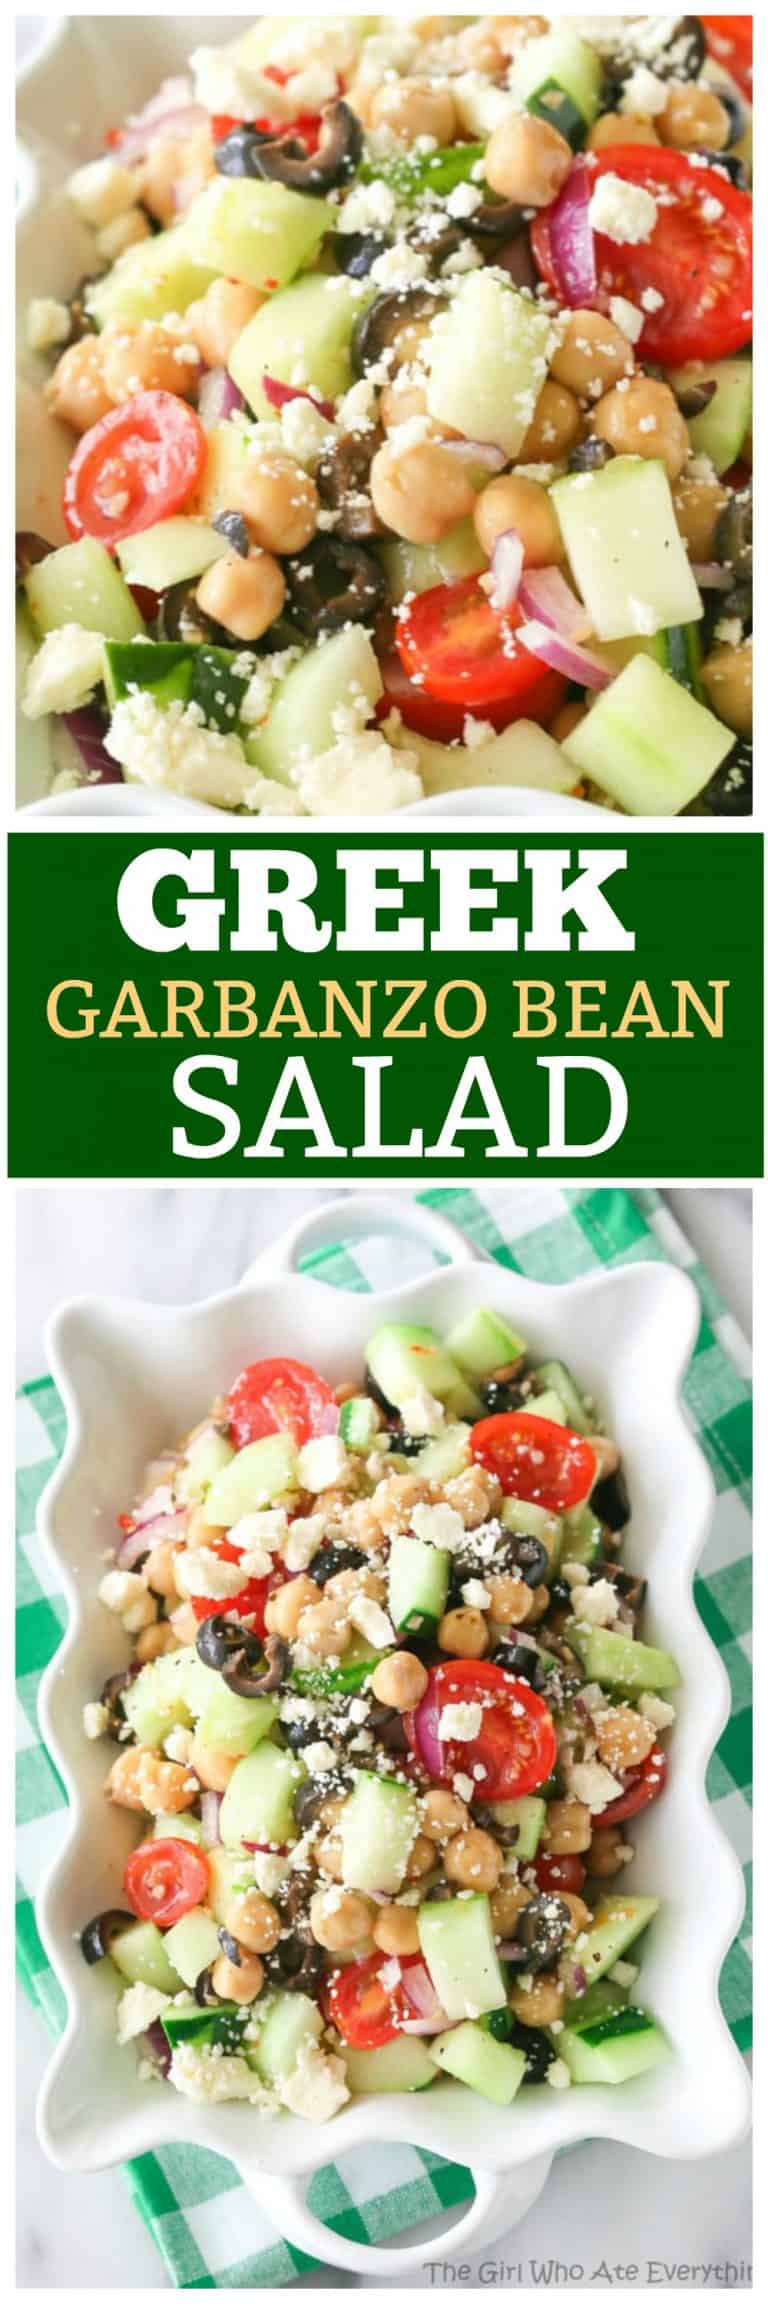 Greek Garbanzo Bean Salad | The Girl Who Ate Everything